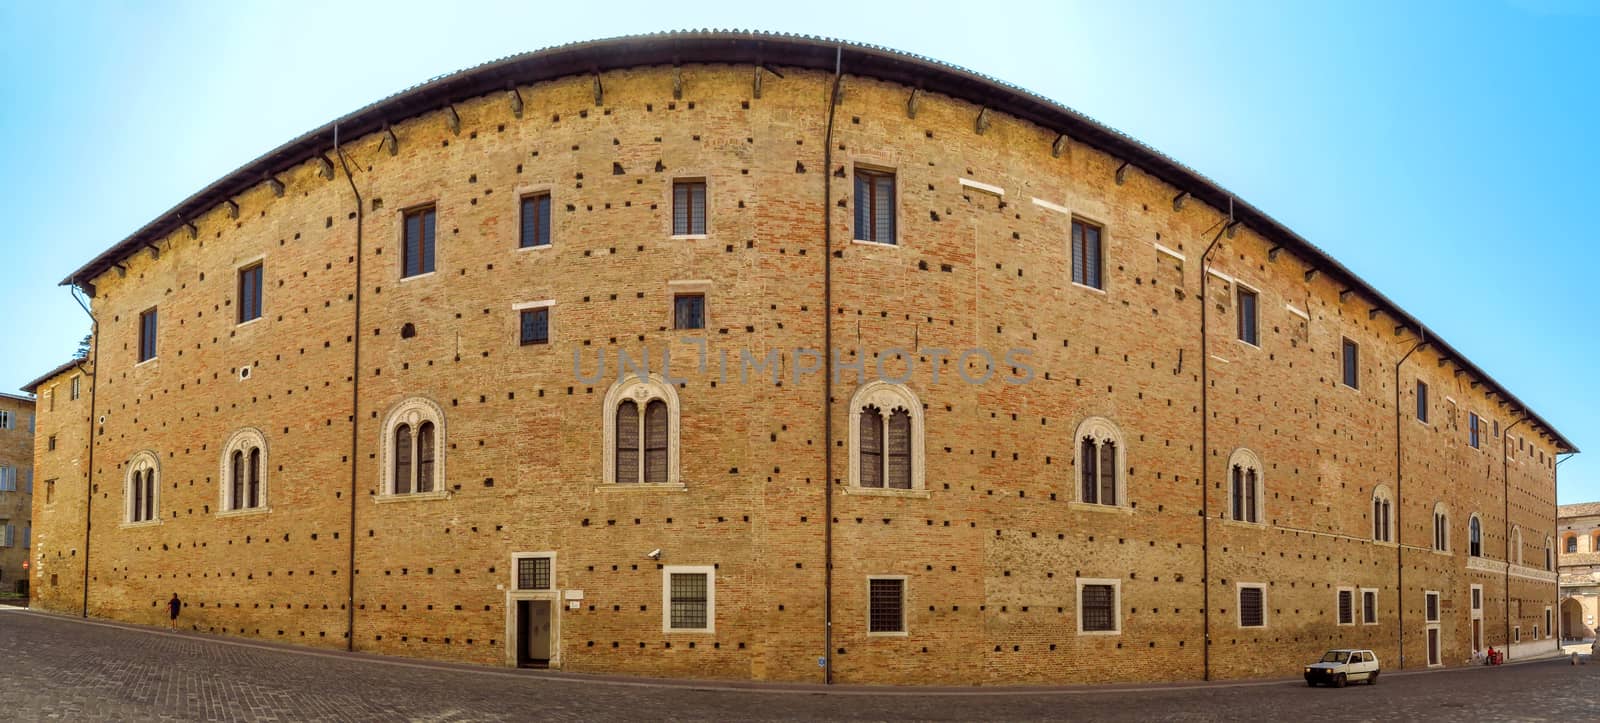 Urbino - Architecture old city by Venakr